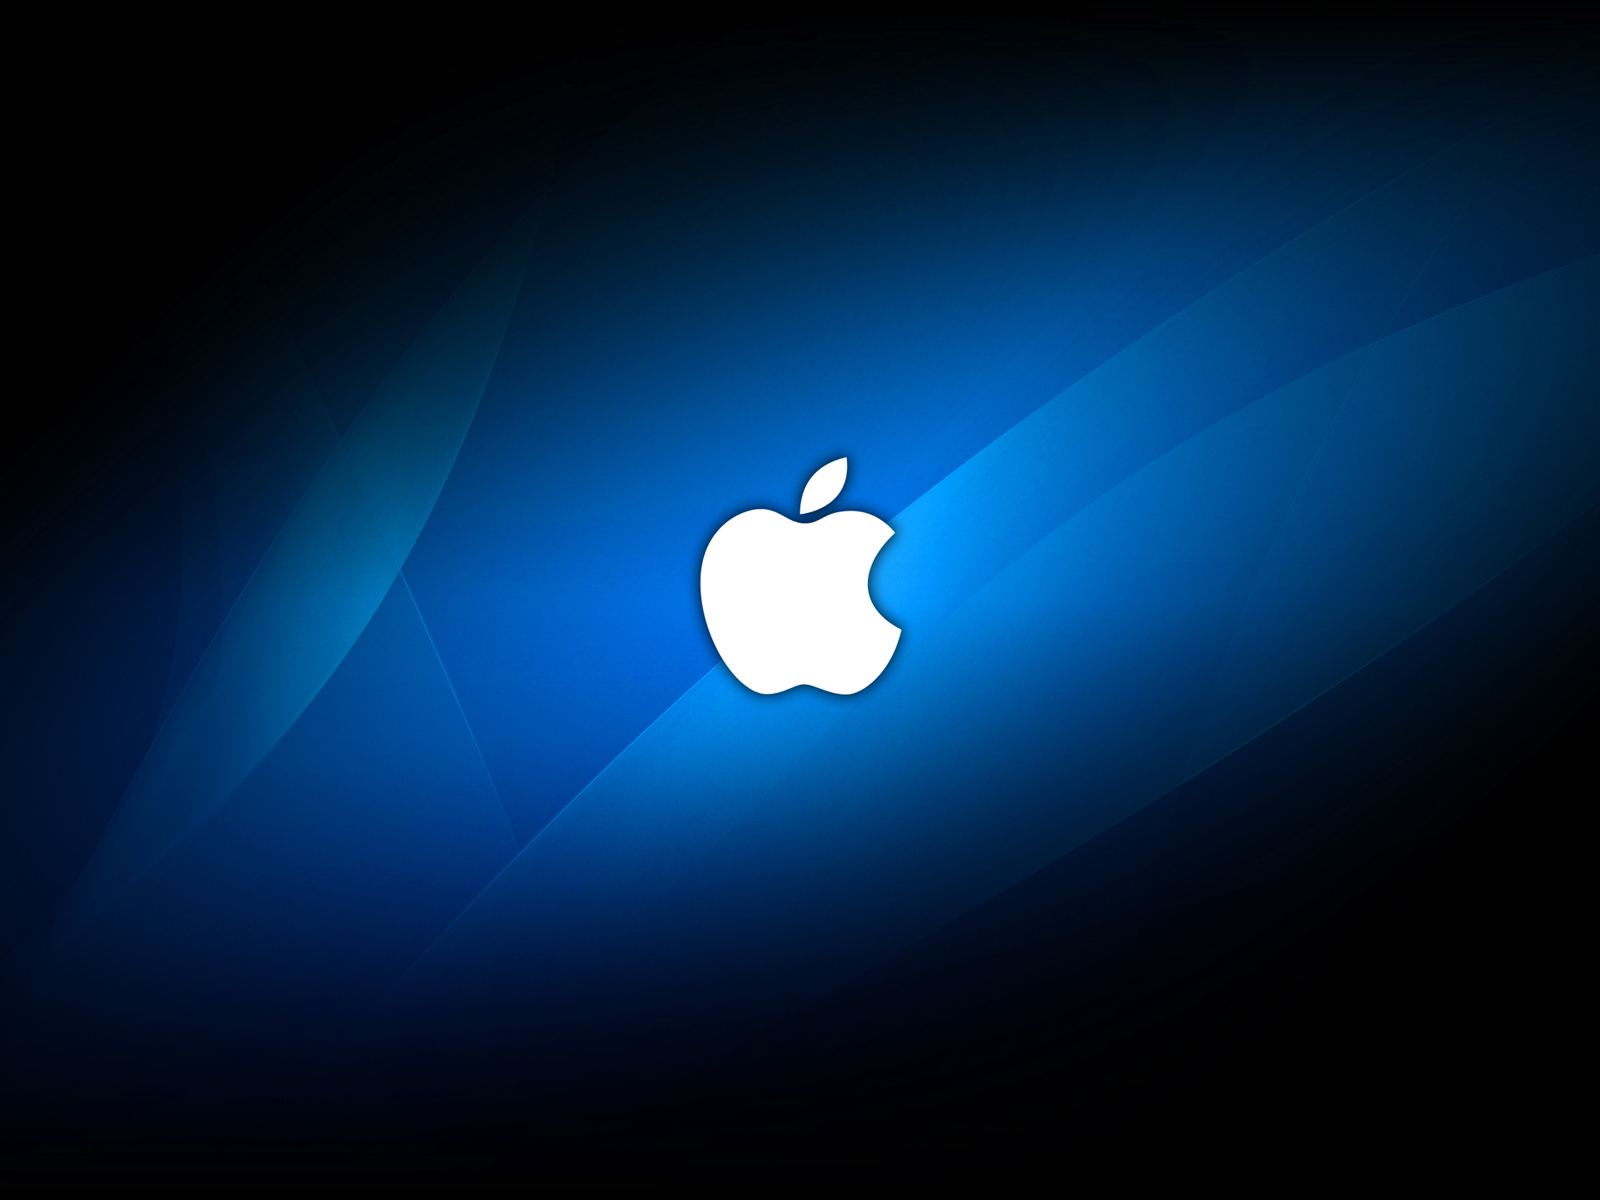 iphone logo wallpaper,blue,operating system,sky,azure,atmosphere